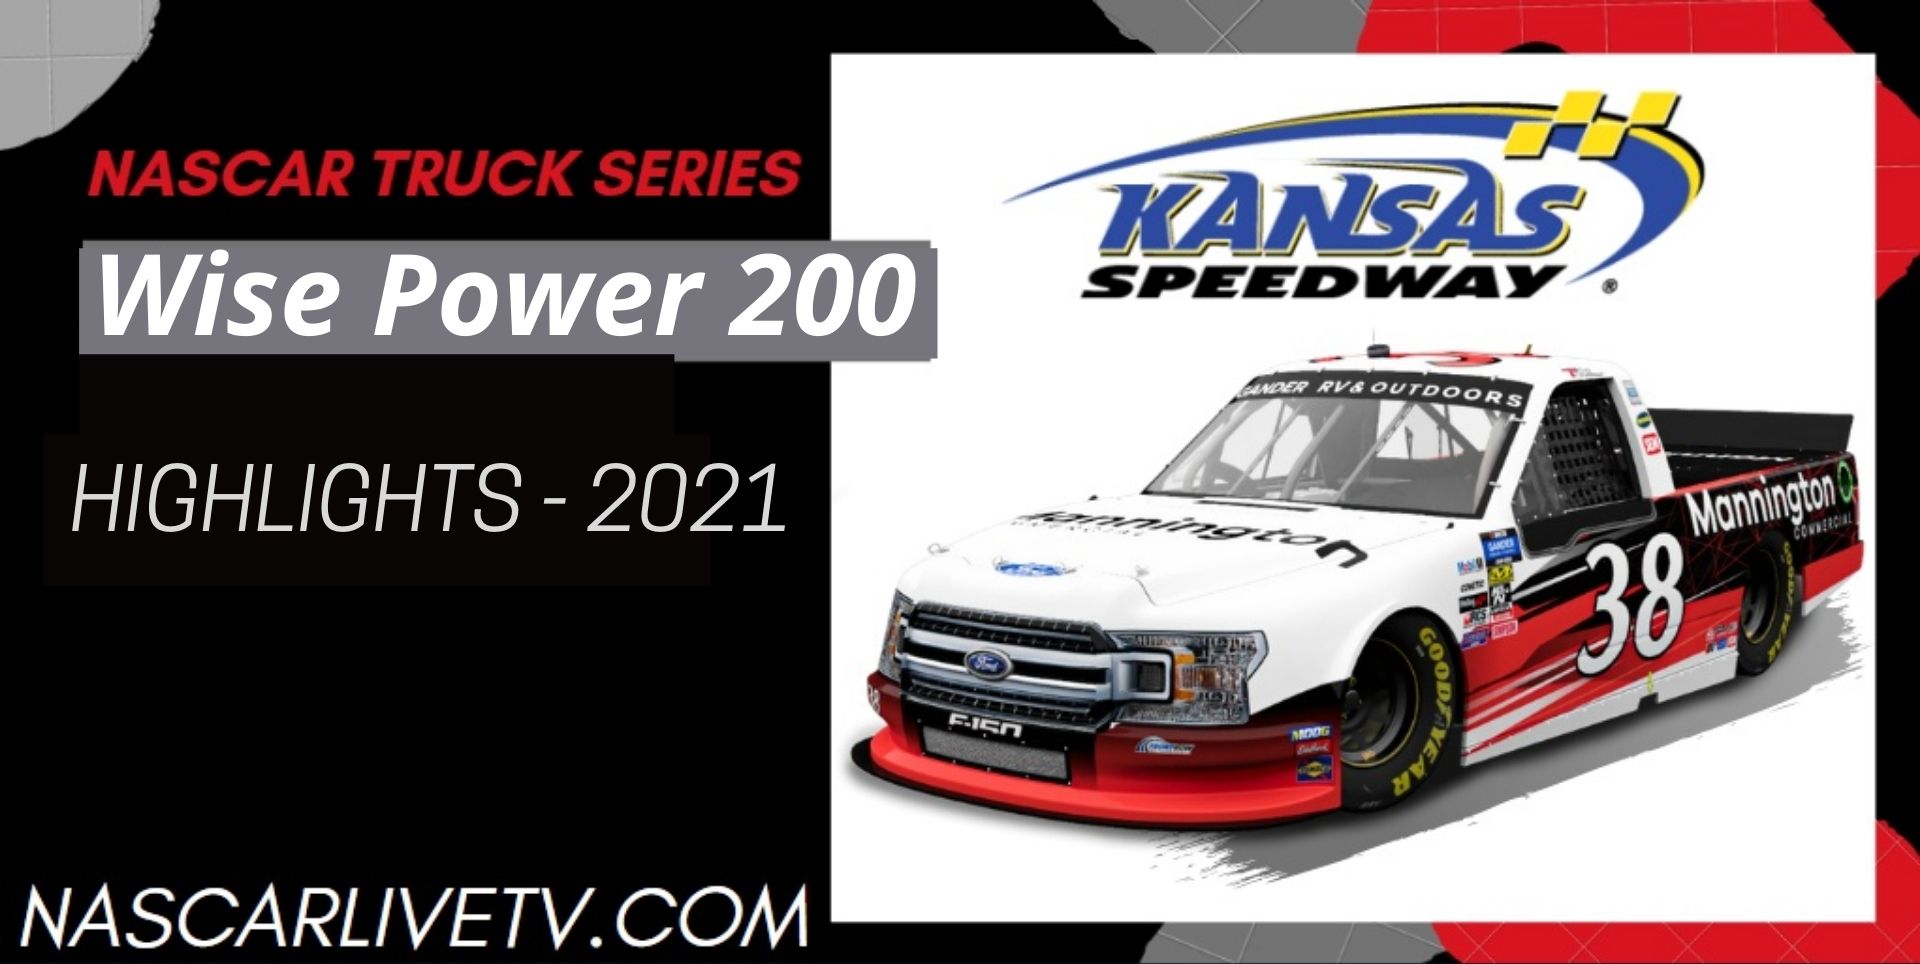 Wise Power 200 NASCAR Truck Series Highlights 2021